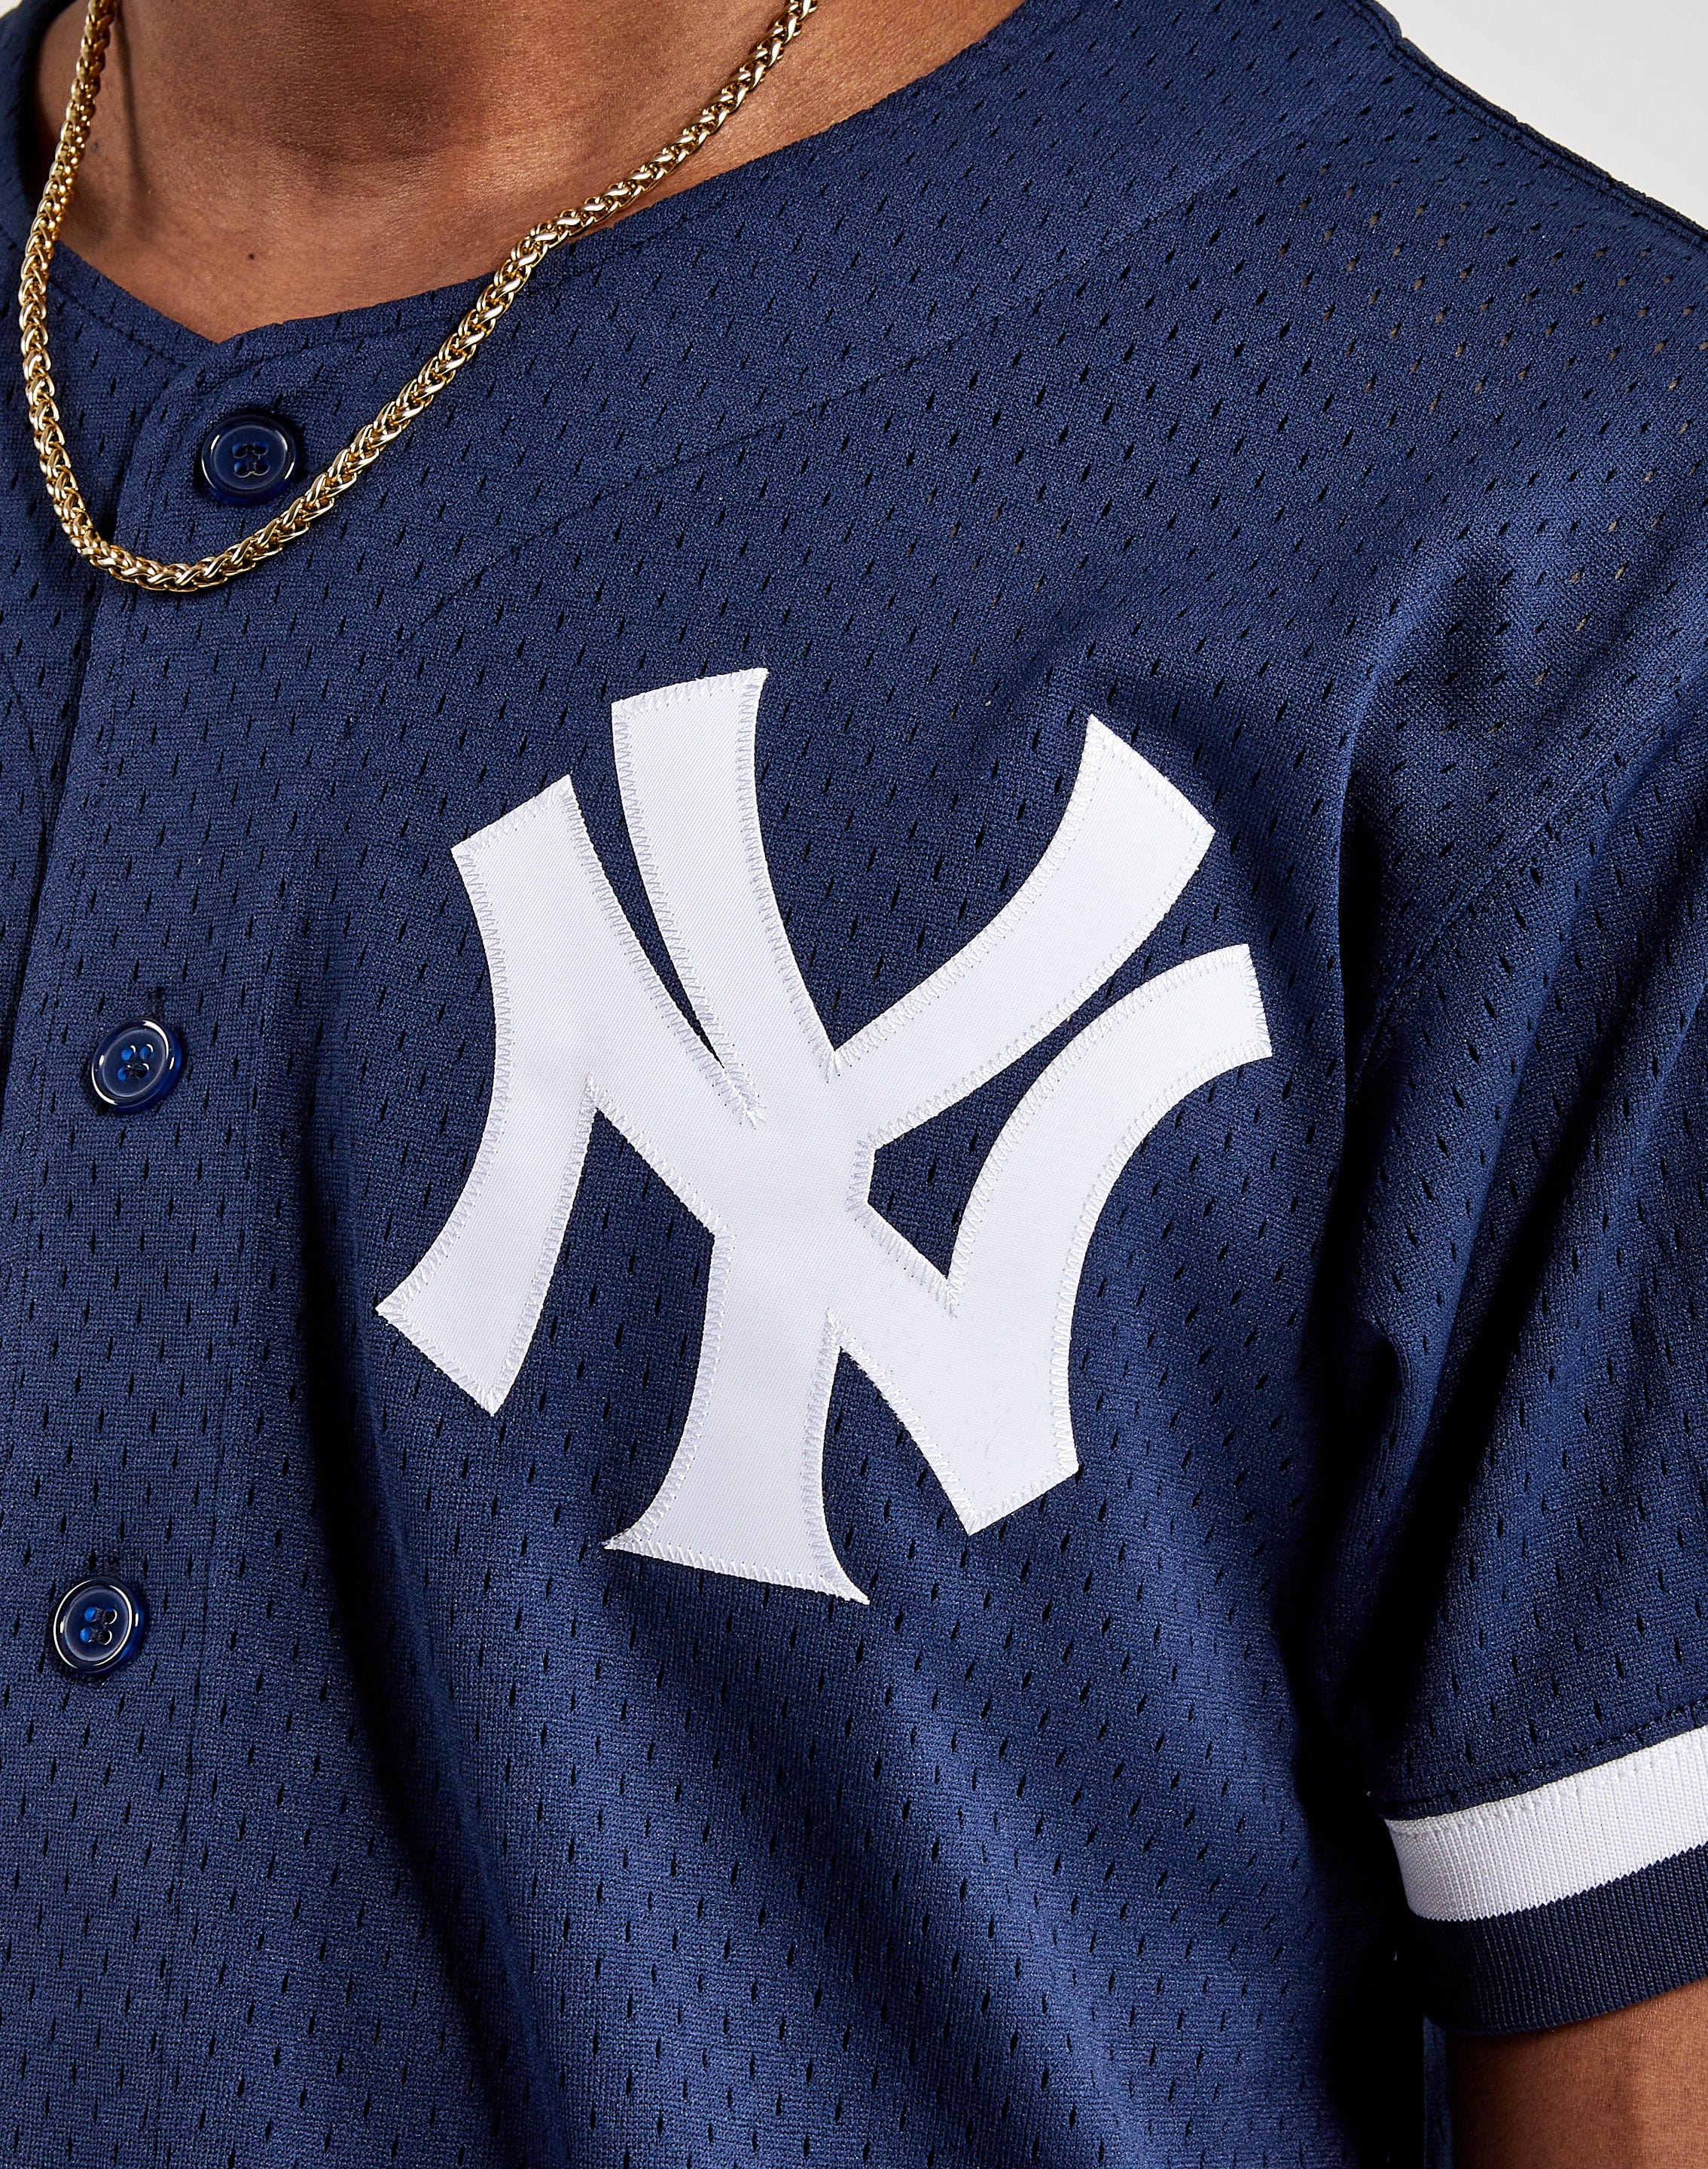 Official Derek Jeter New York Yankees T-Shirts, Yankees Shirt